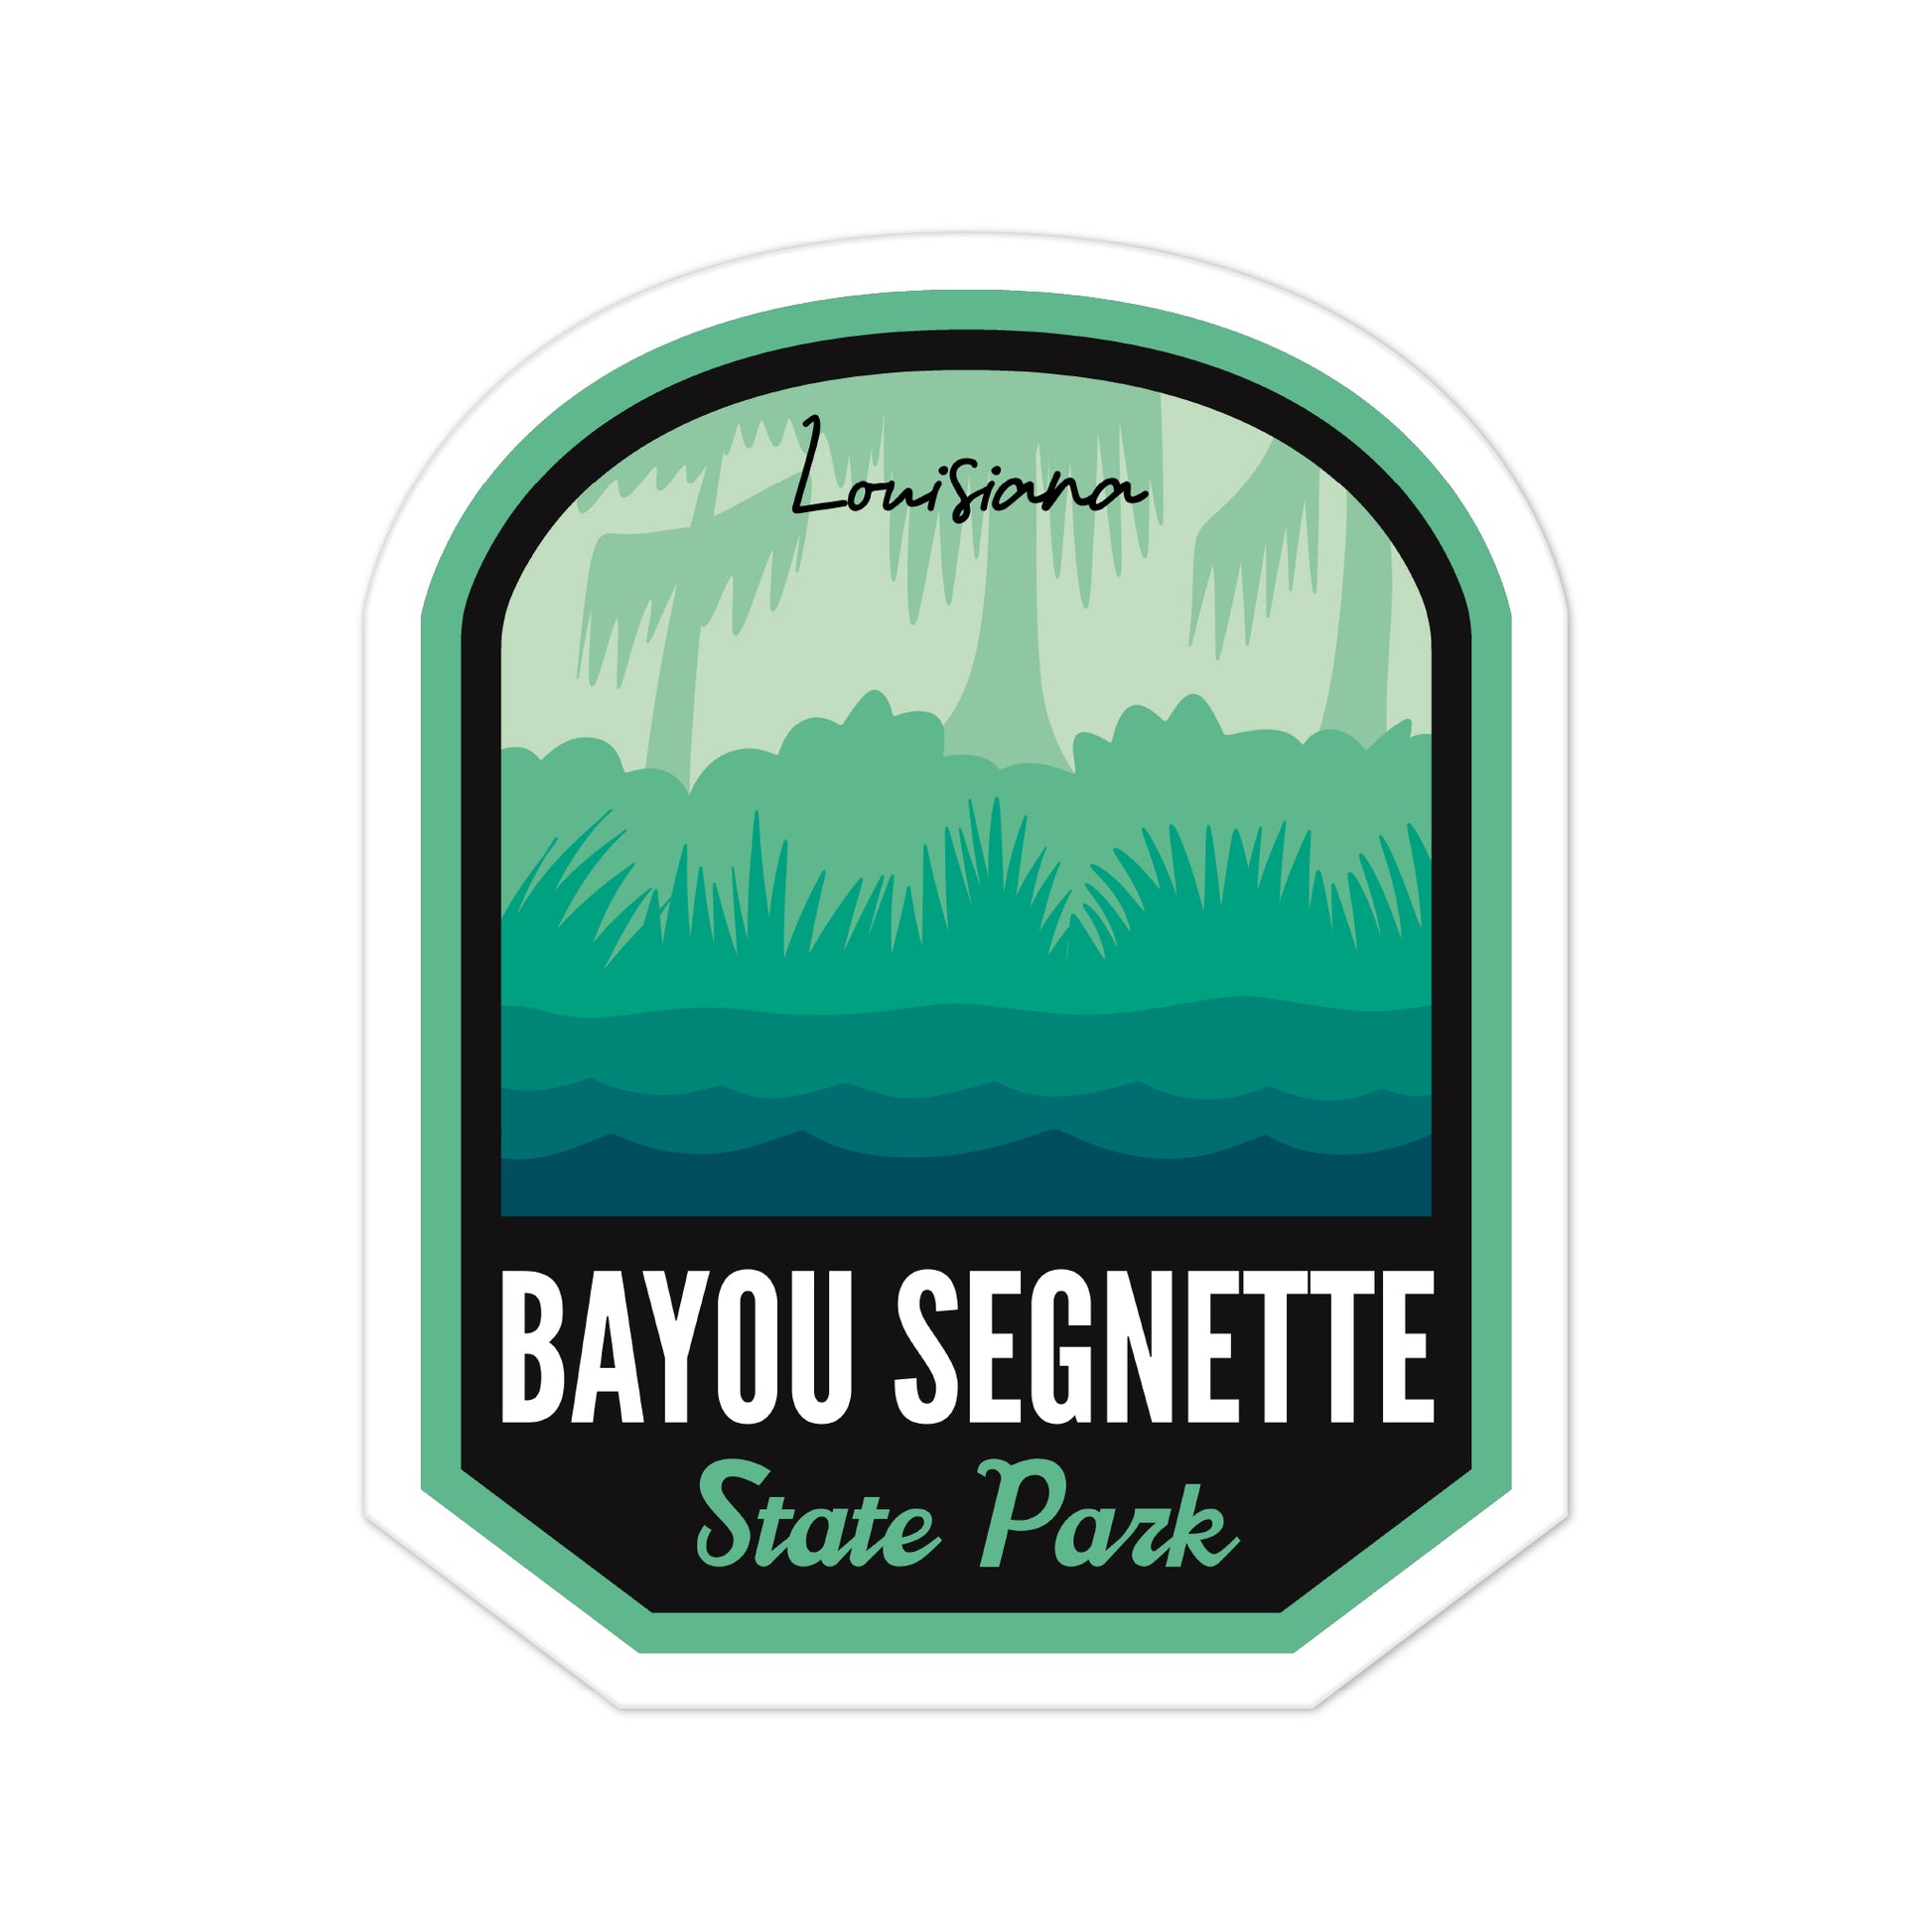 A sticker of Bayou Segnette State Park